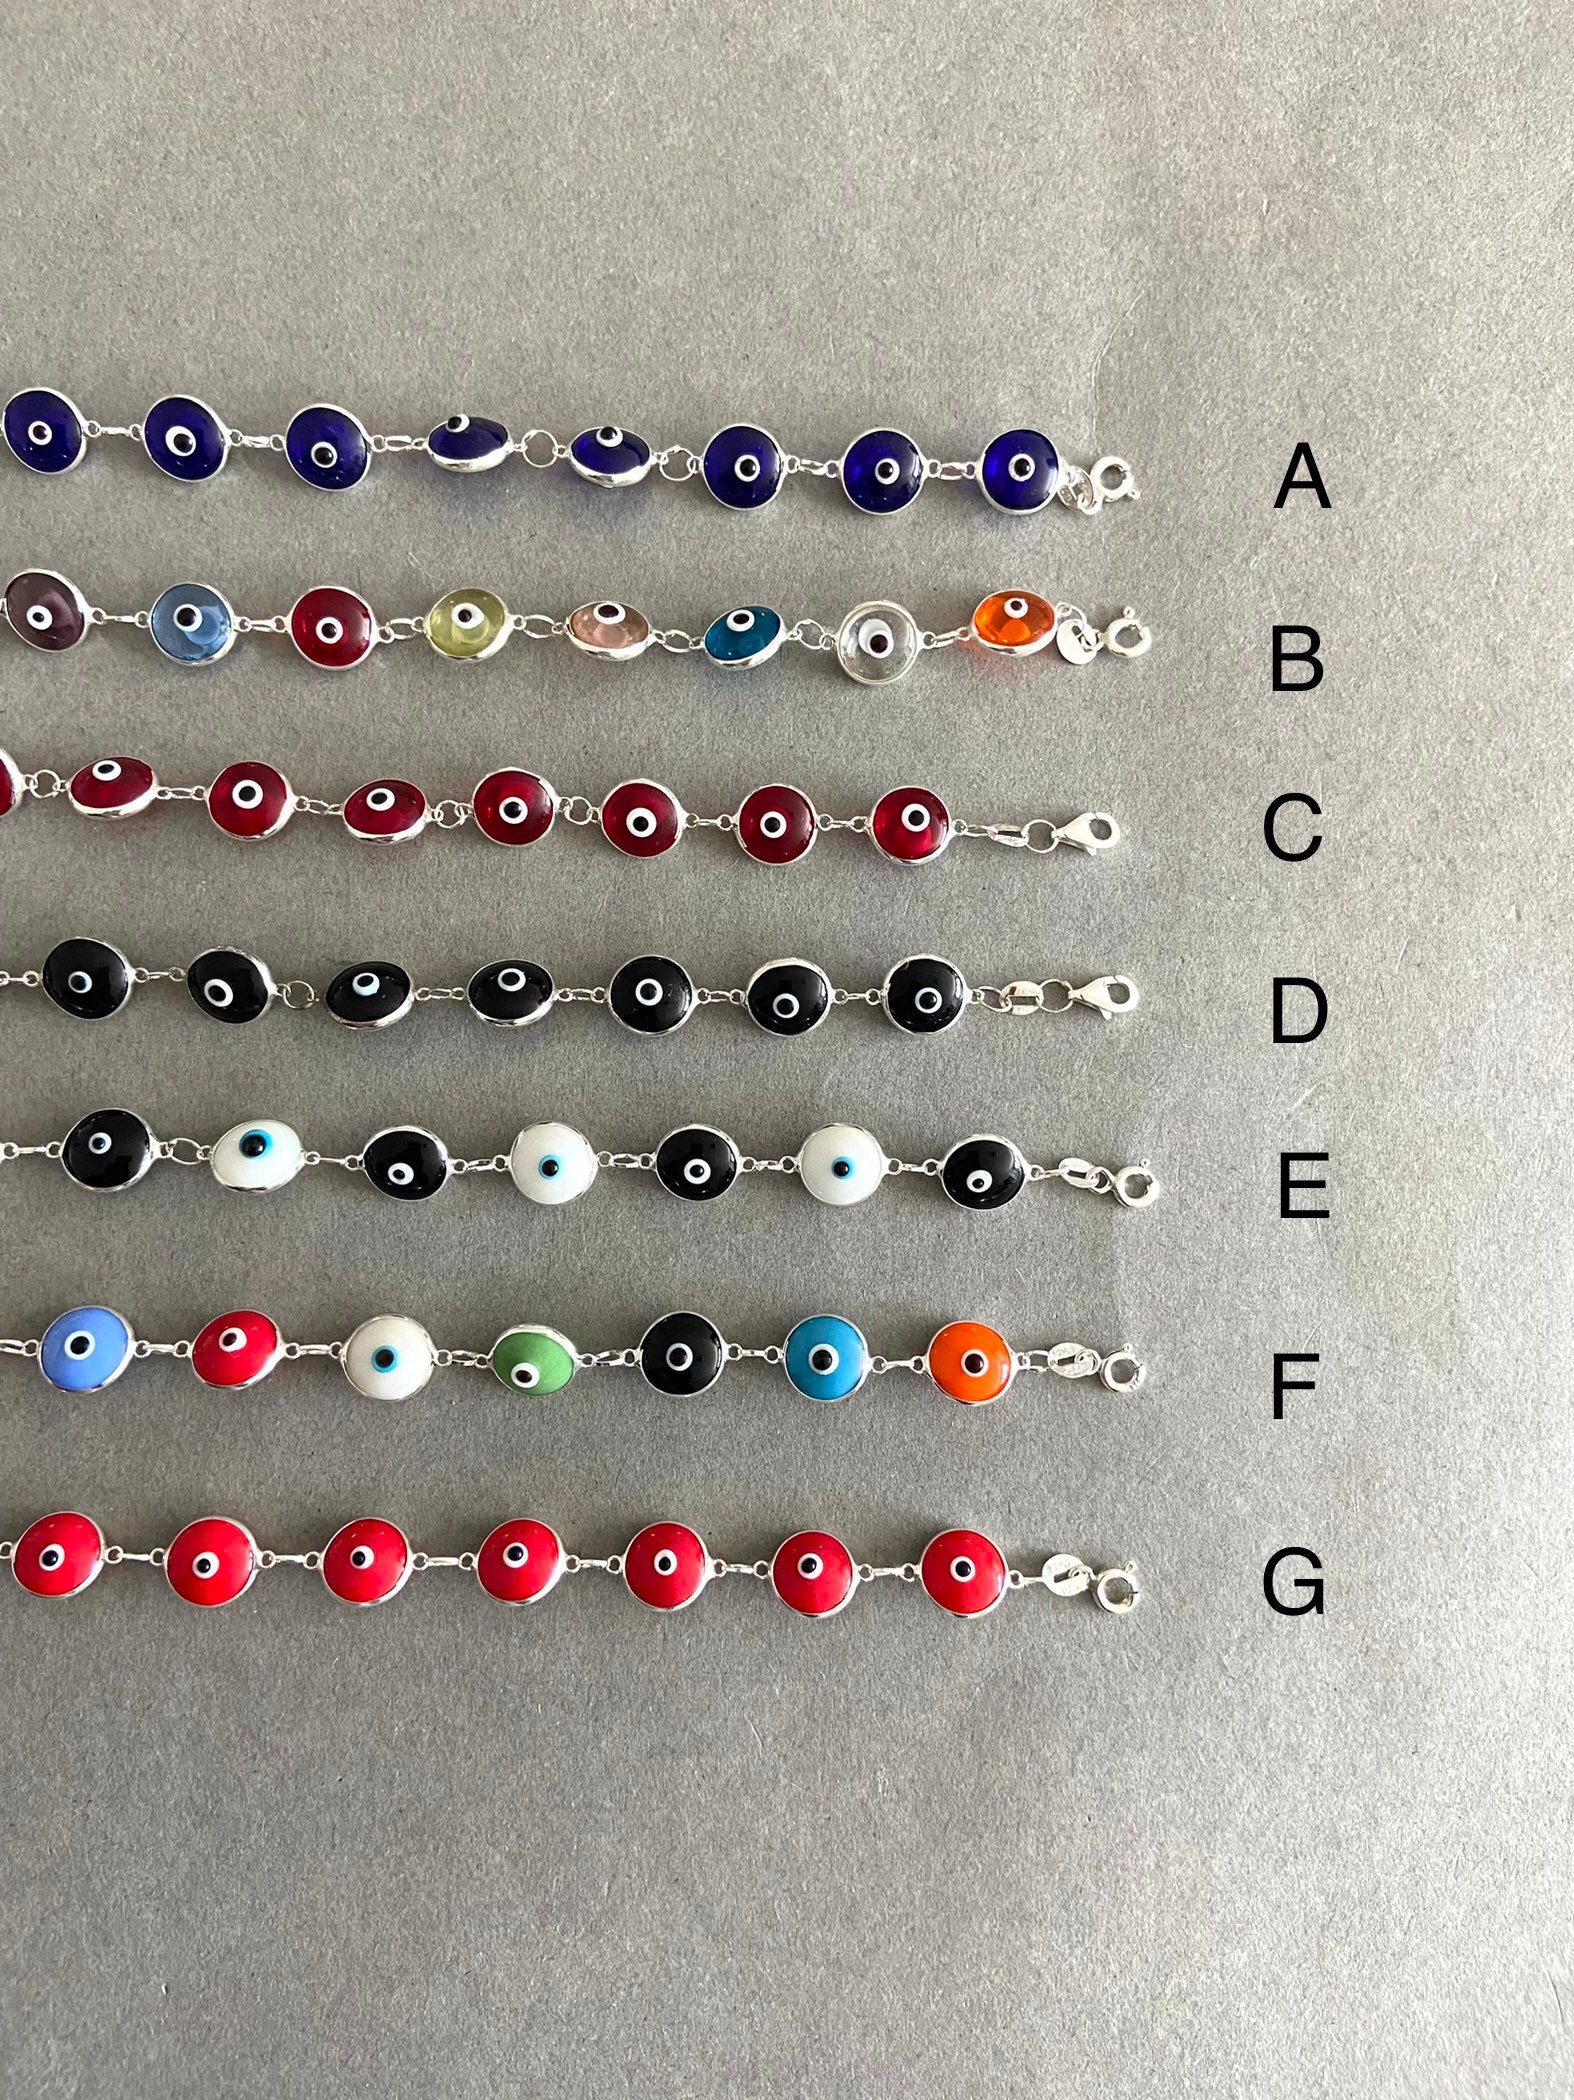 Tiny Ayin Hara Beads | Sacred Evil Eye Bead | Protective Nazar Jewelry  Making | Talisman Bead Supplies (5pcs / Assorted Mix / 5mm / 2 Sided)